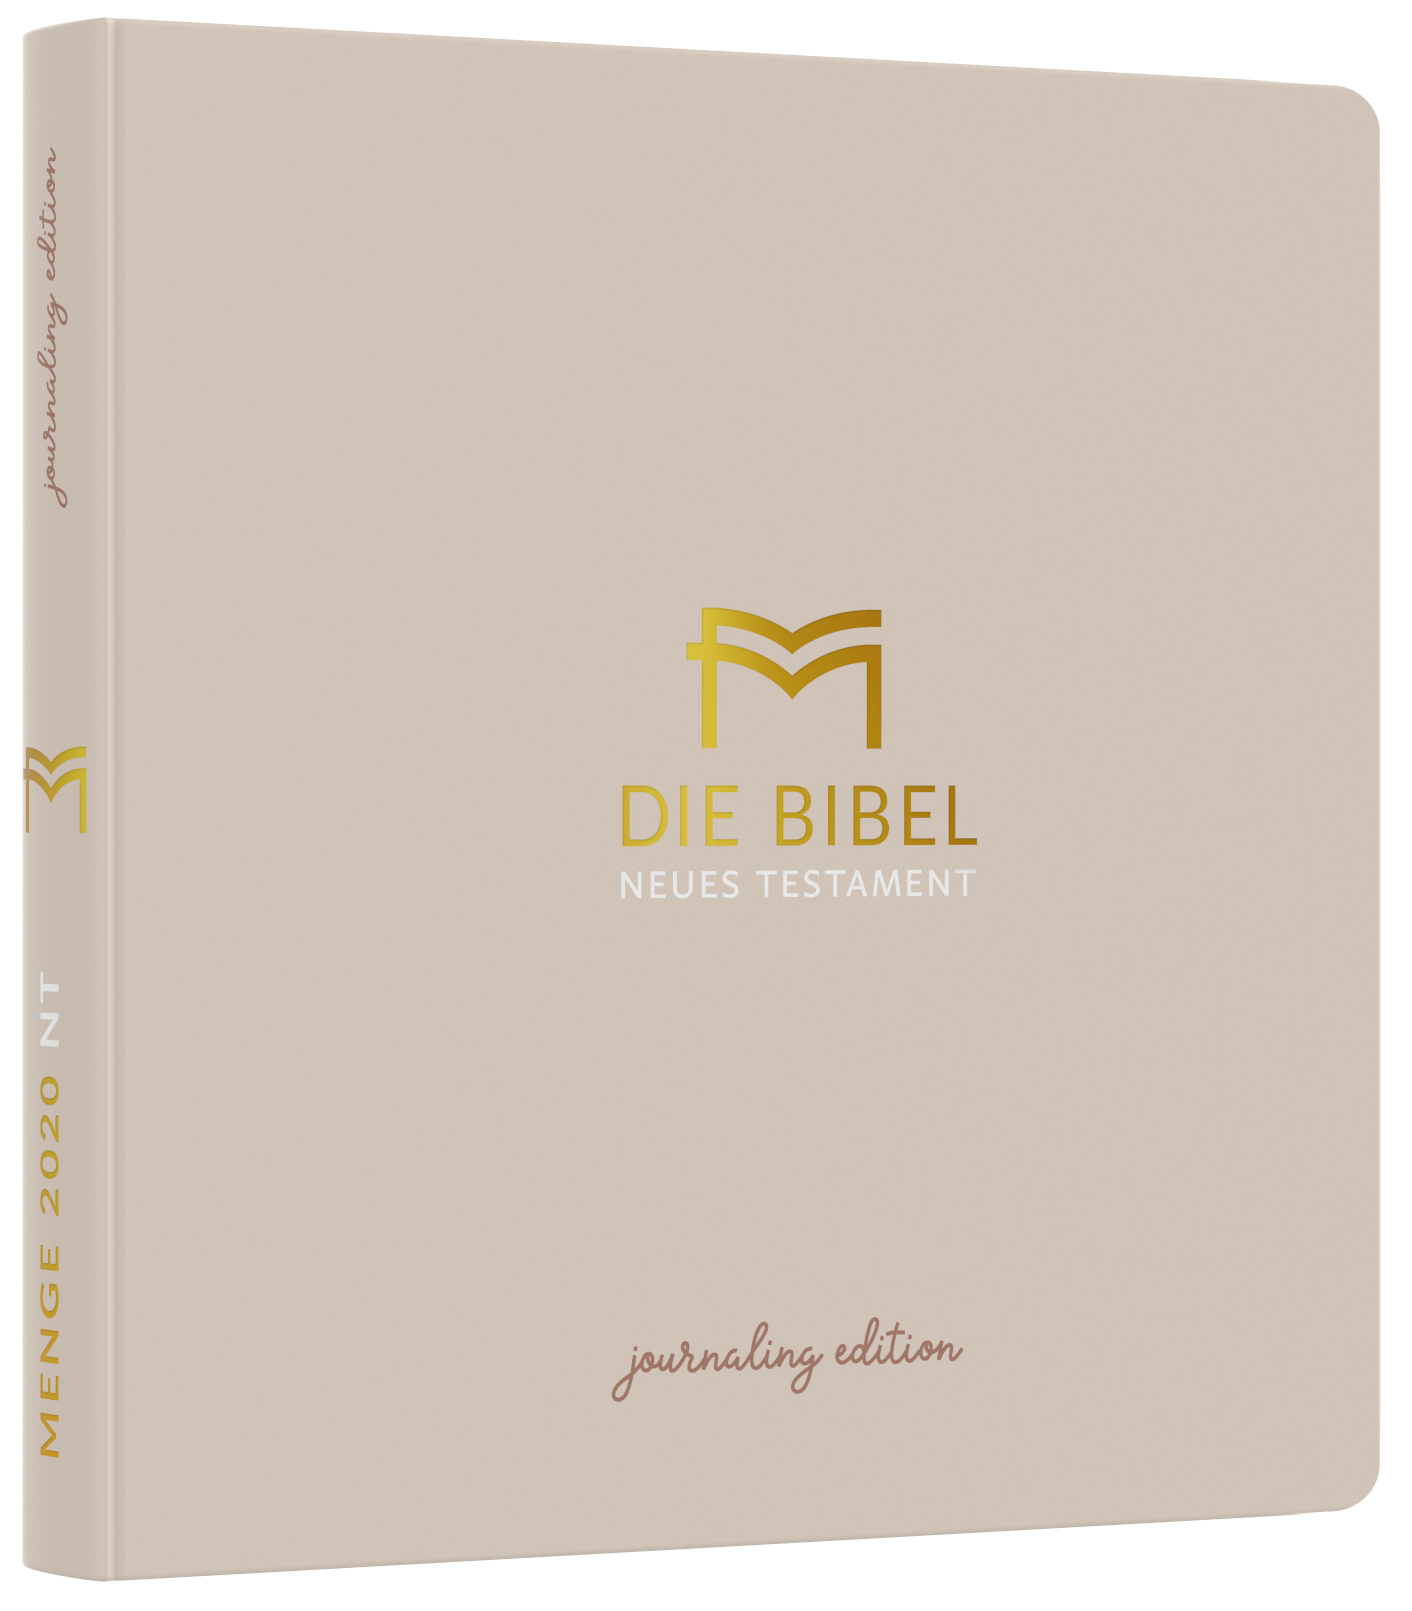 Menge 2020 (Bibel) NT – Journaling Edition, Umschlag »Mattrosa«